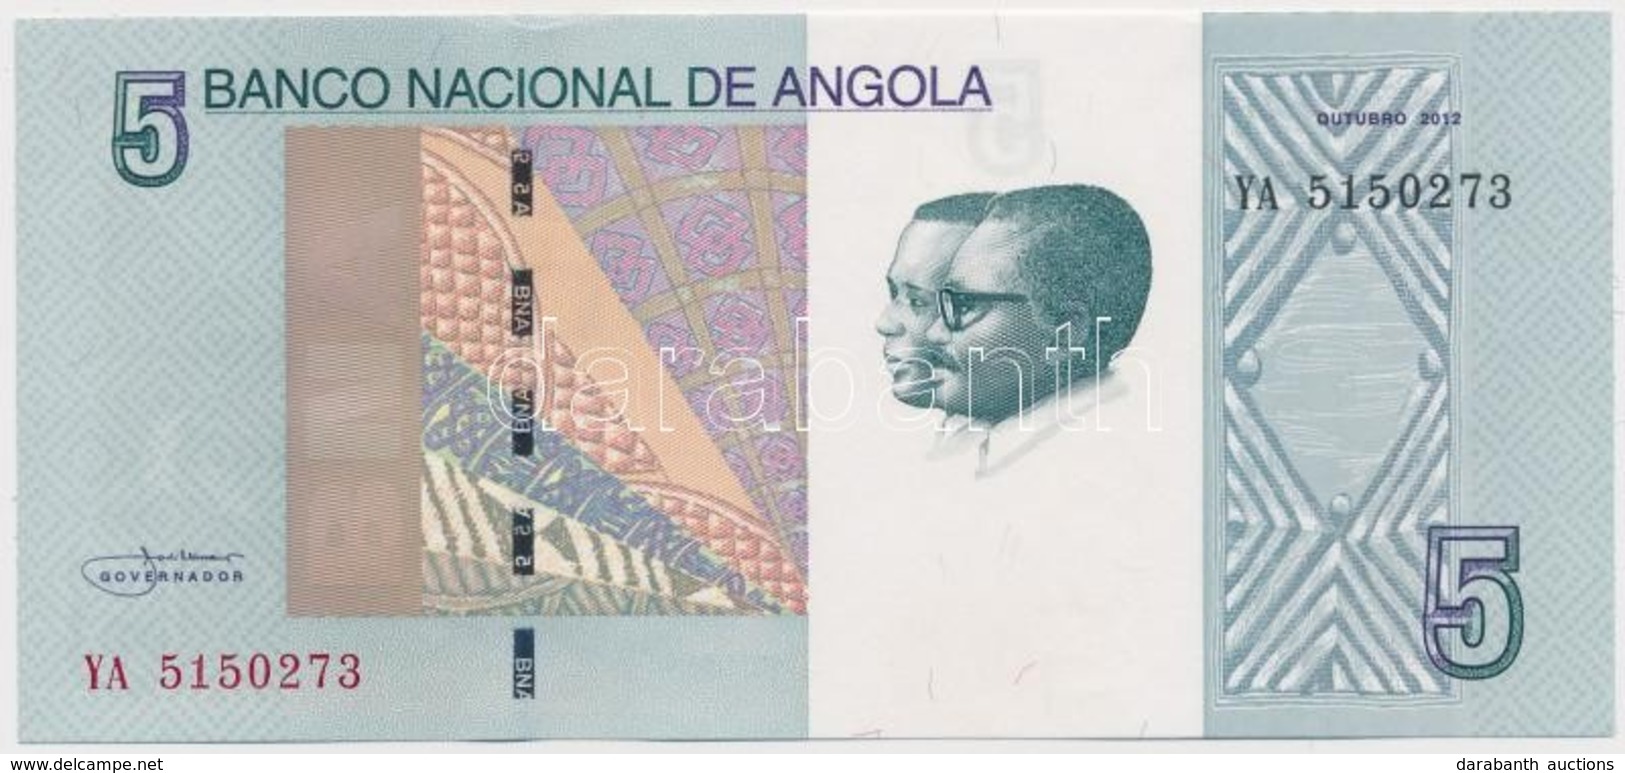 Angola 2012. 5K T:I
Angola 2012. 5 Kwanzas C:UNC - Unclassified